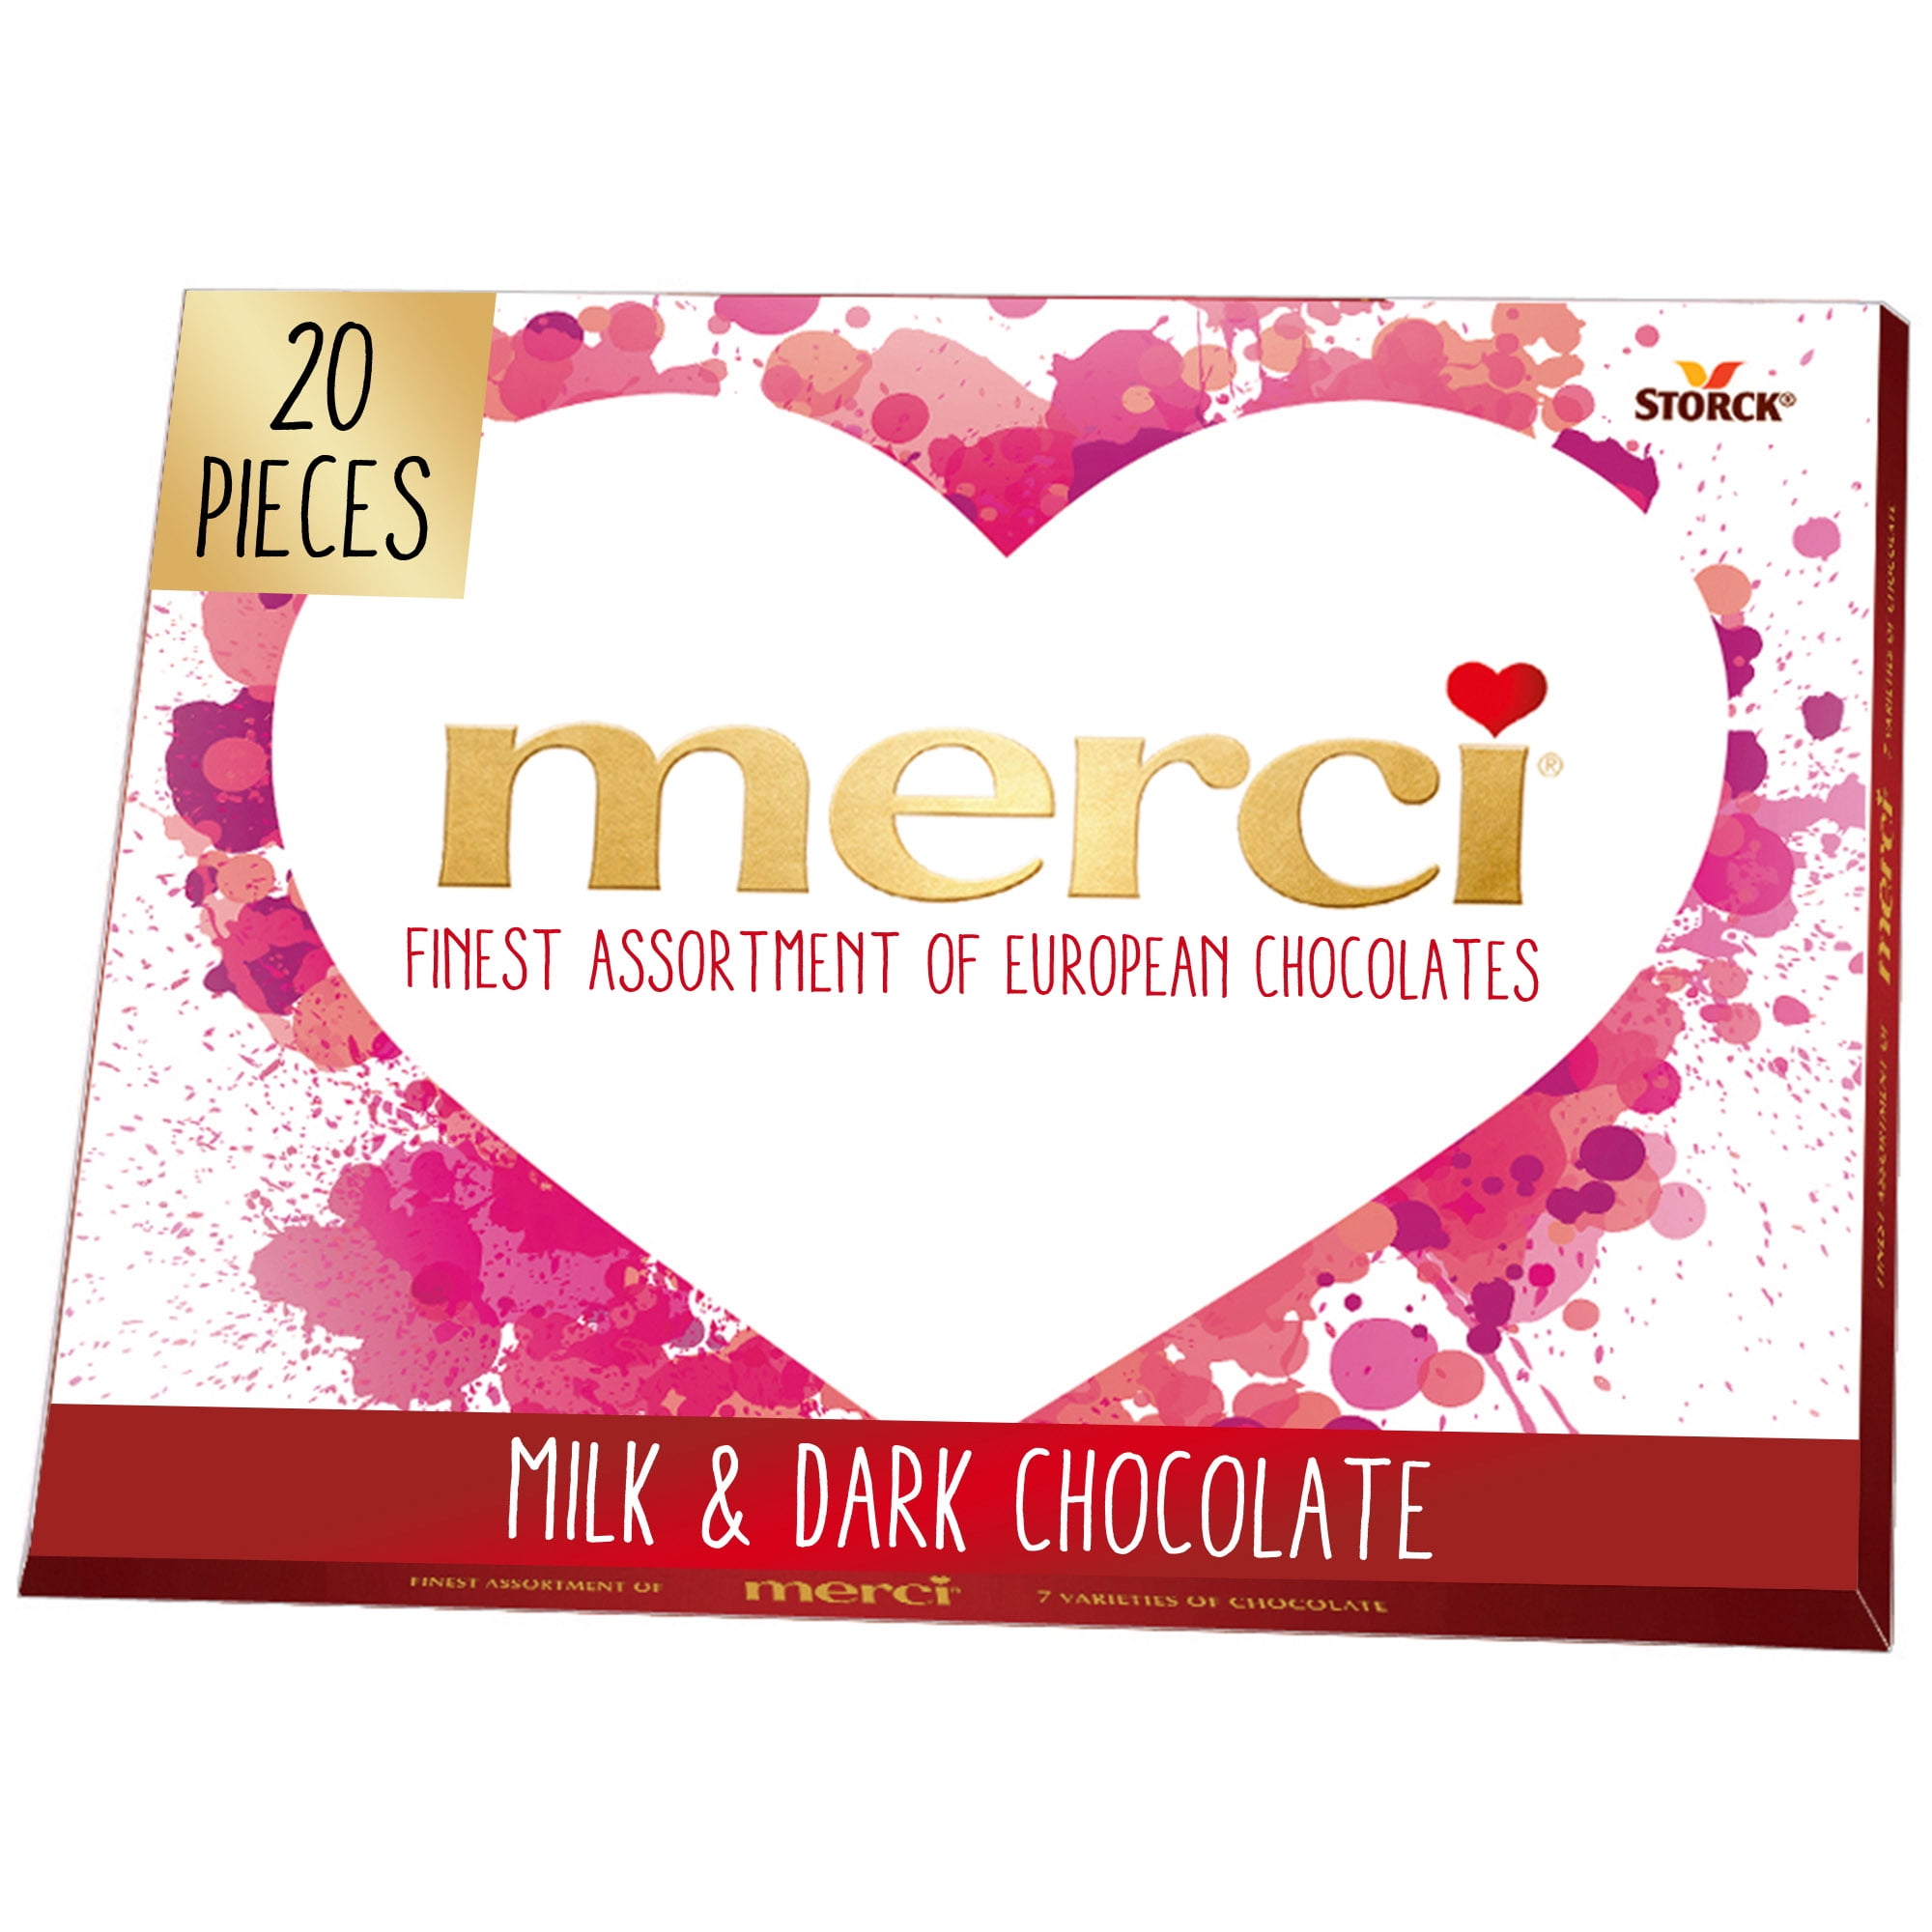 Storck Merci Finest Selection Chocolat d'hiver 250g / 8.81 oz